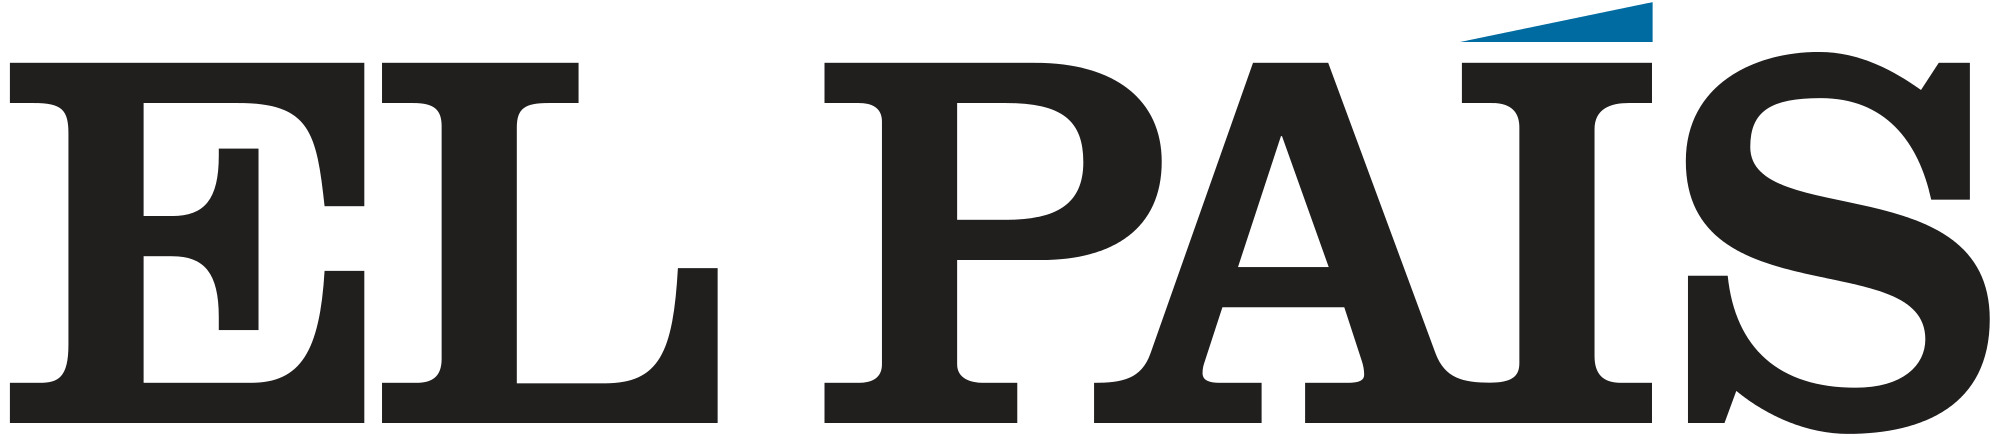 El Pai?s Newspaper Logo icons